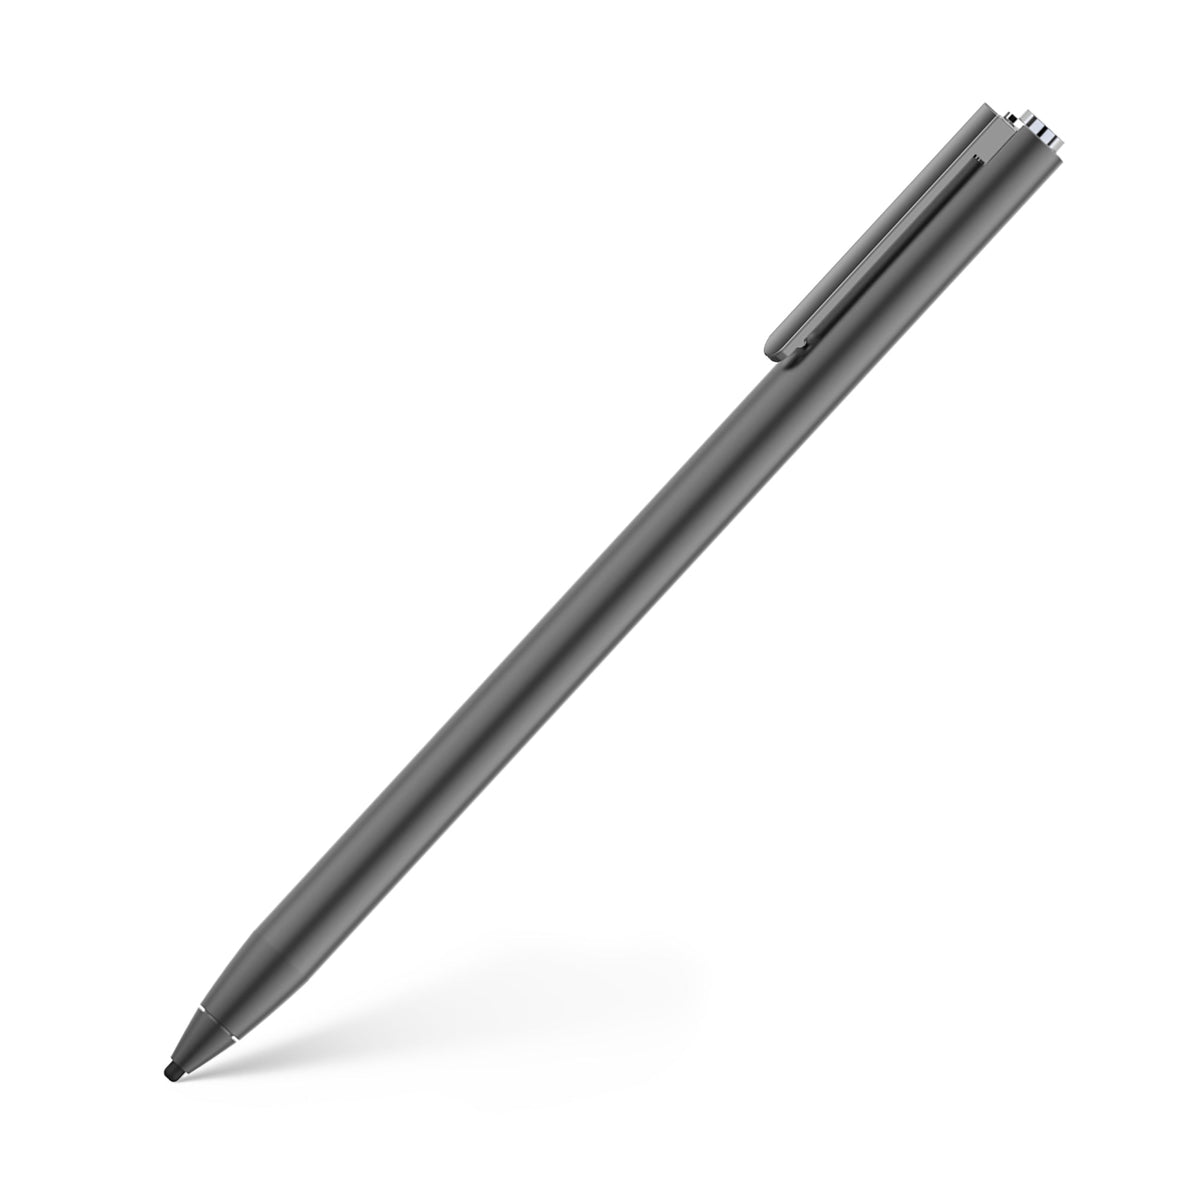 [OPEN BOX] ADONIT Dash 4 True Universal Dual Stylus, Palm Rejection Pencil - Black